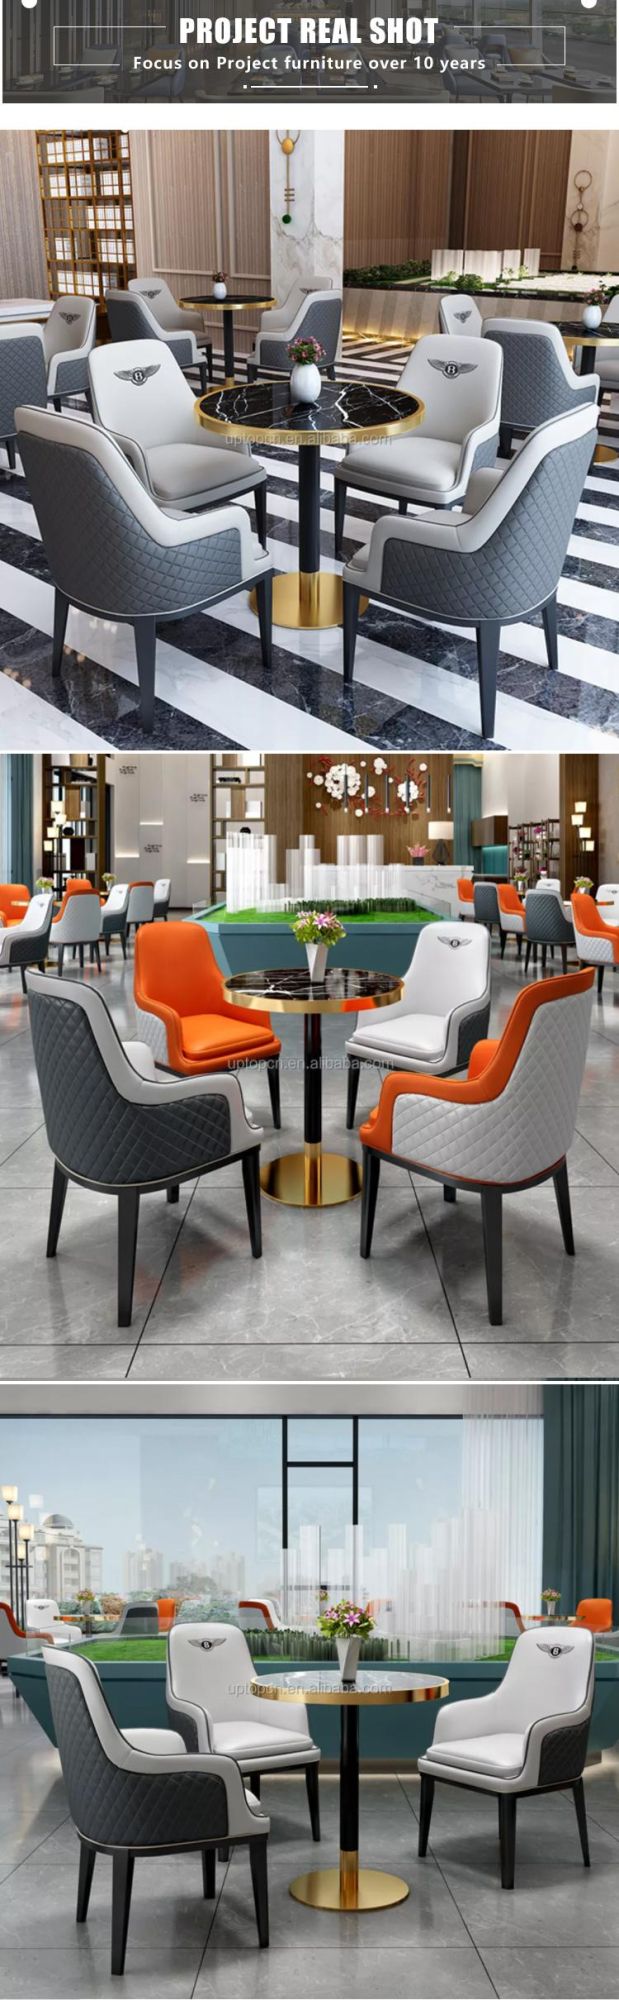 fashion Living Room Sofa with Wave Shape Backrest (SP-KS359)